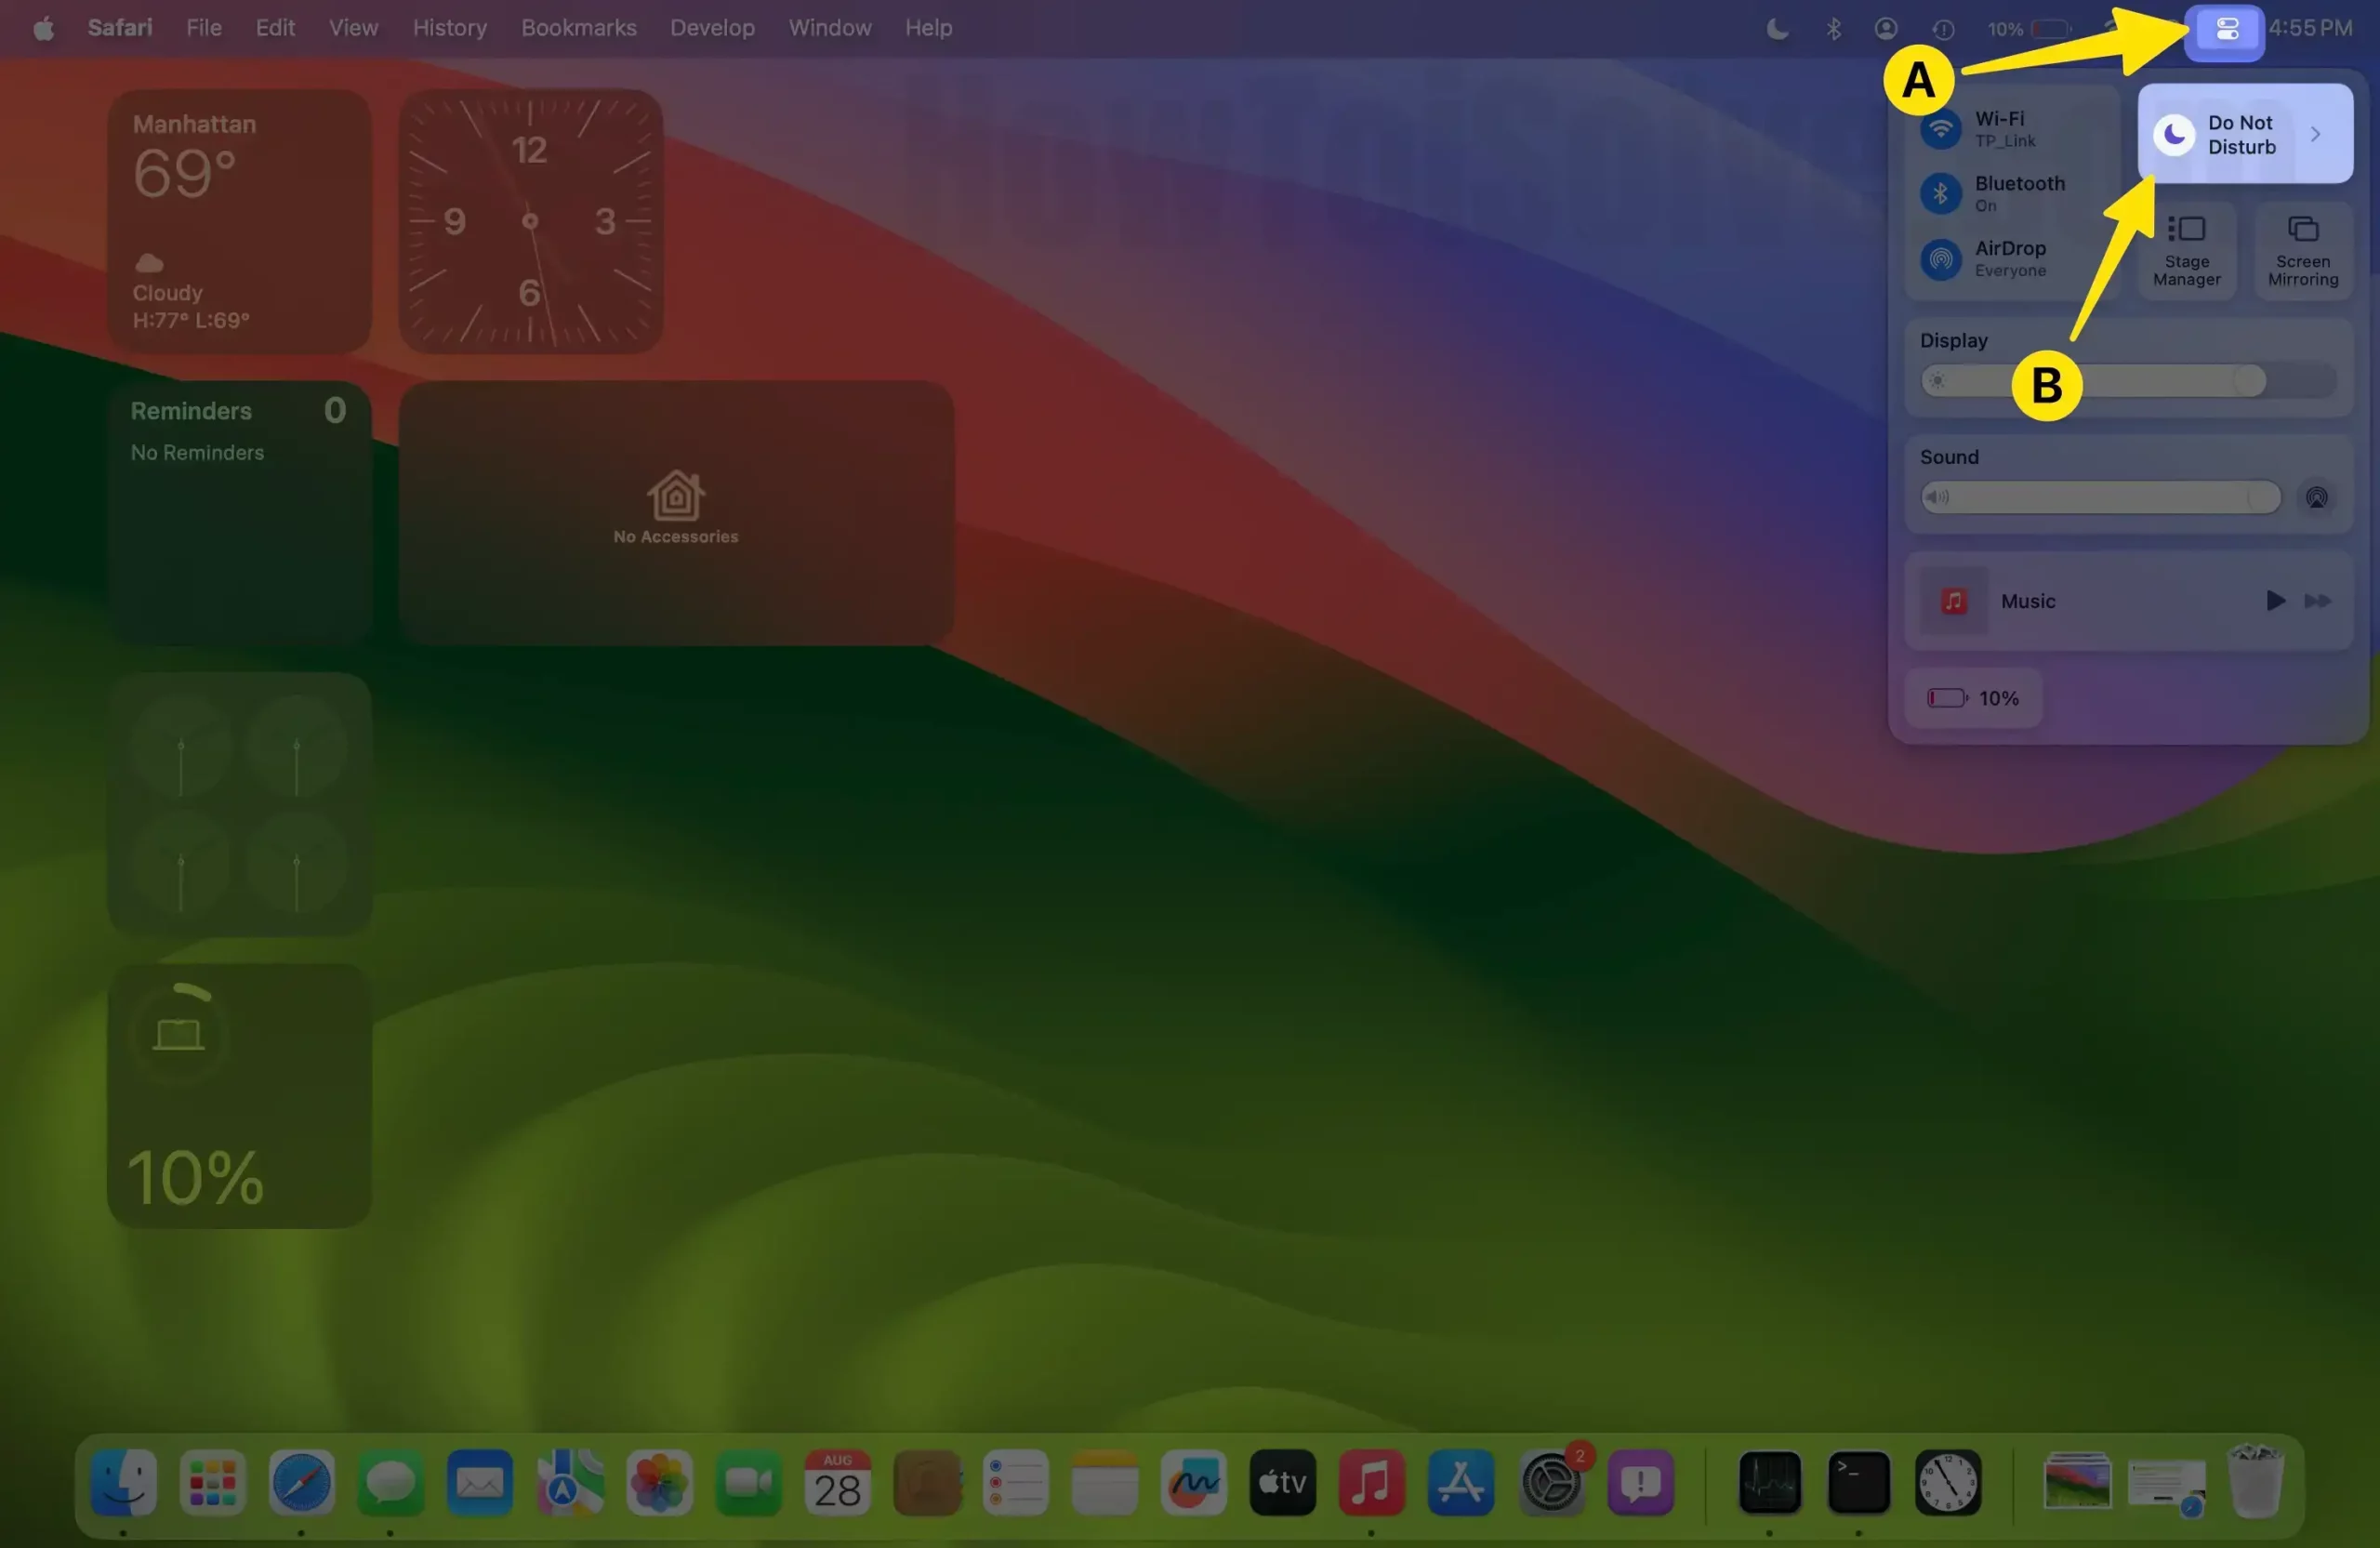 Open Control Center on Mac